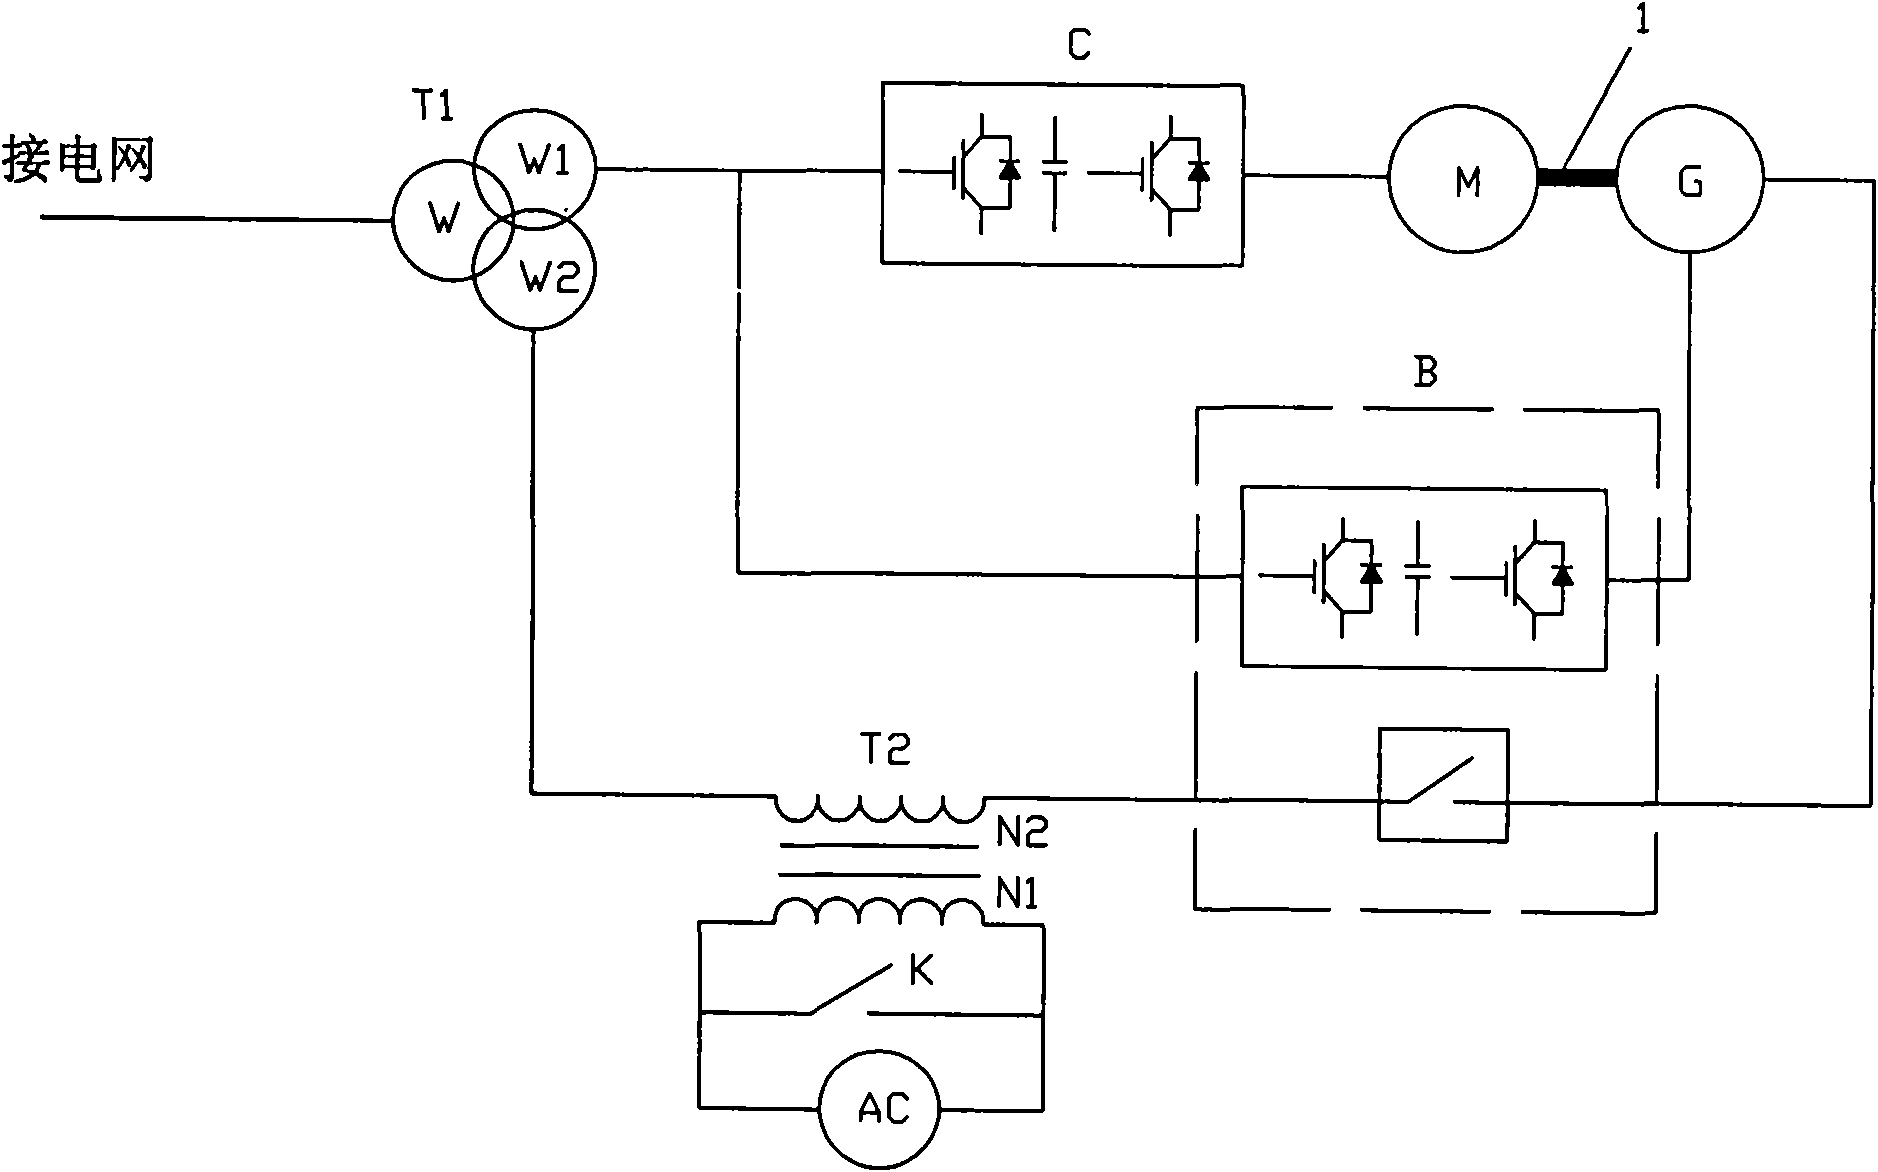 Fall-down experimental method of simulating power grid